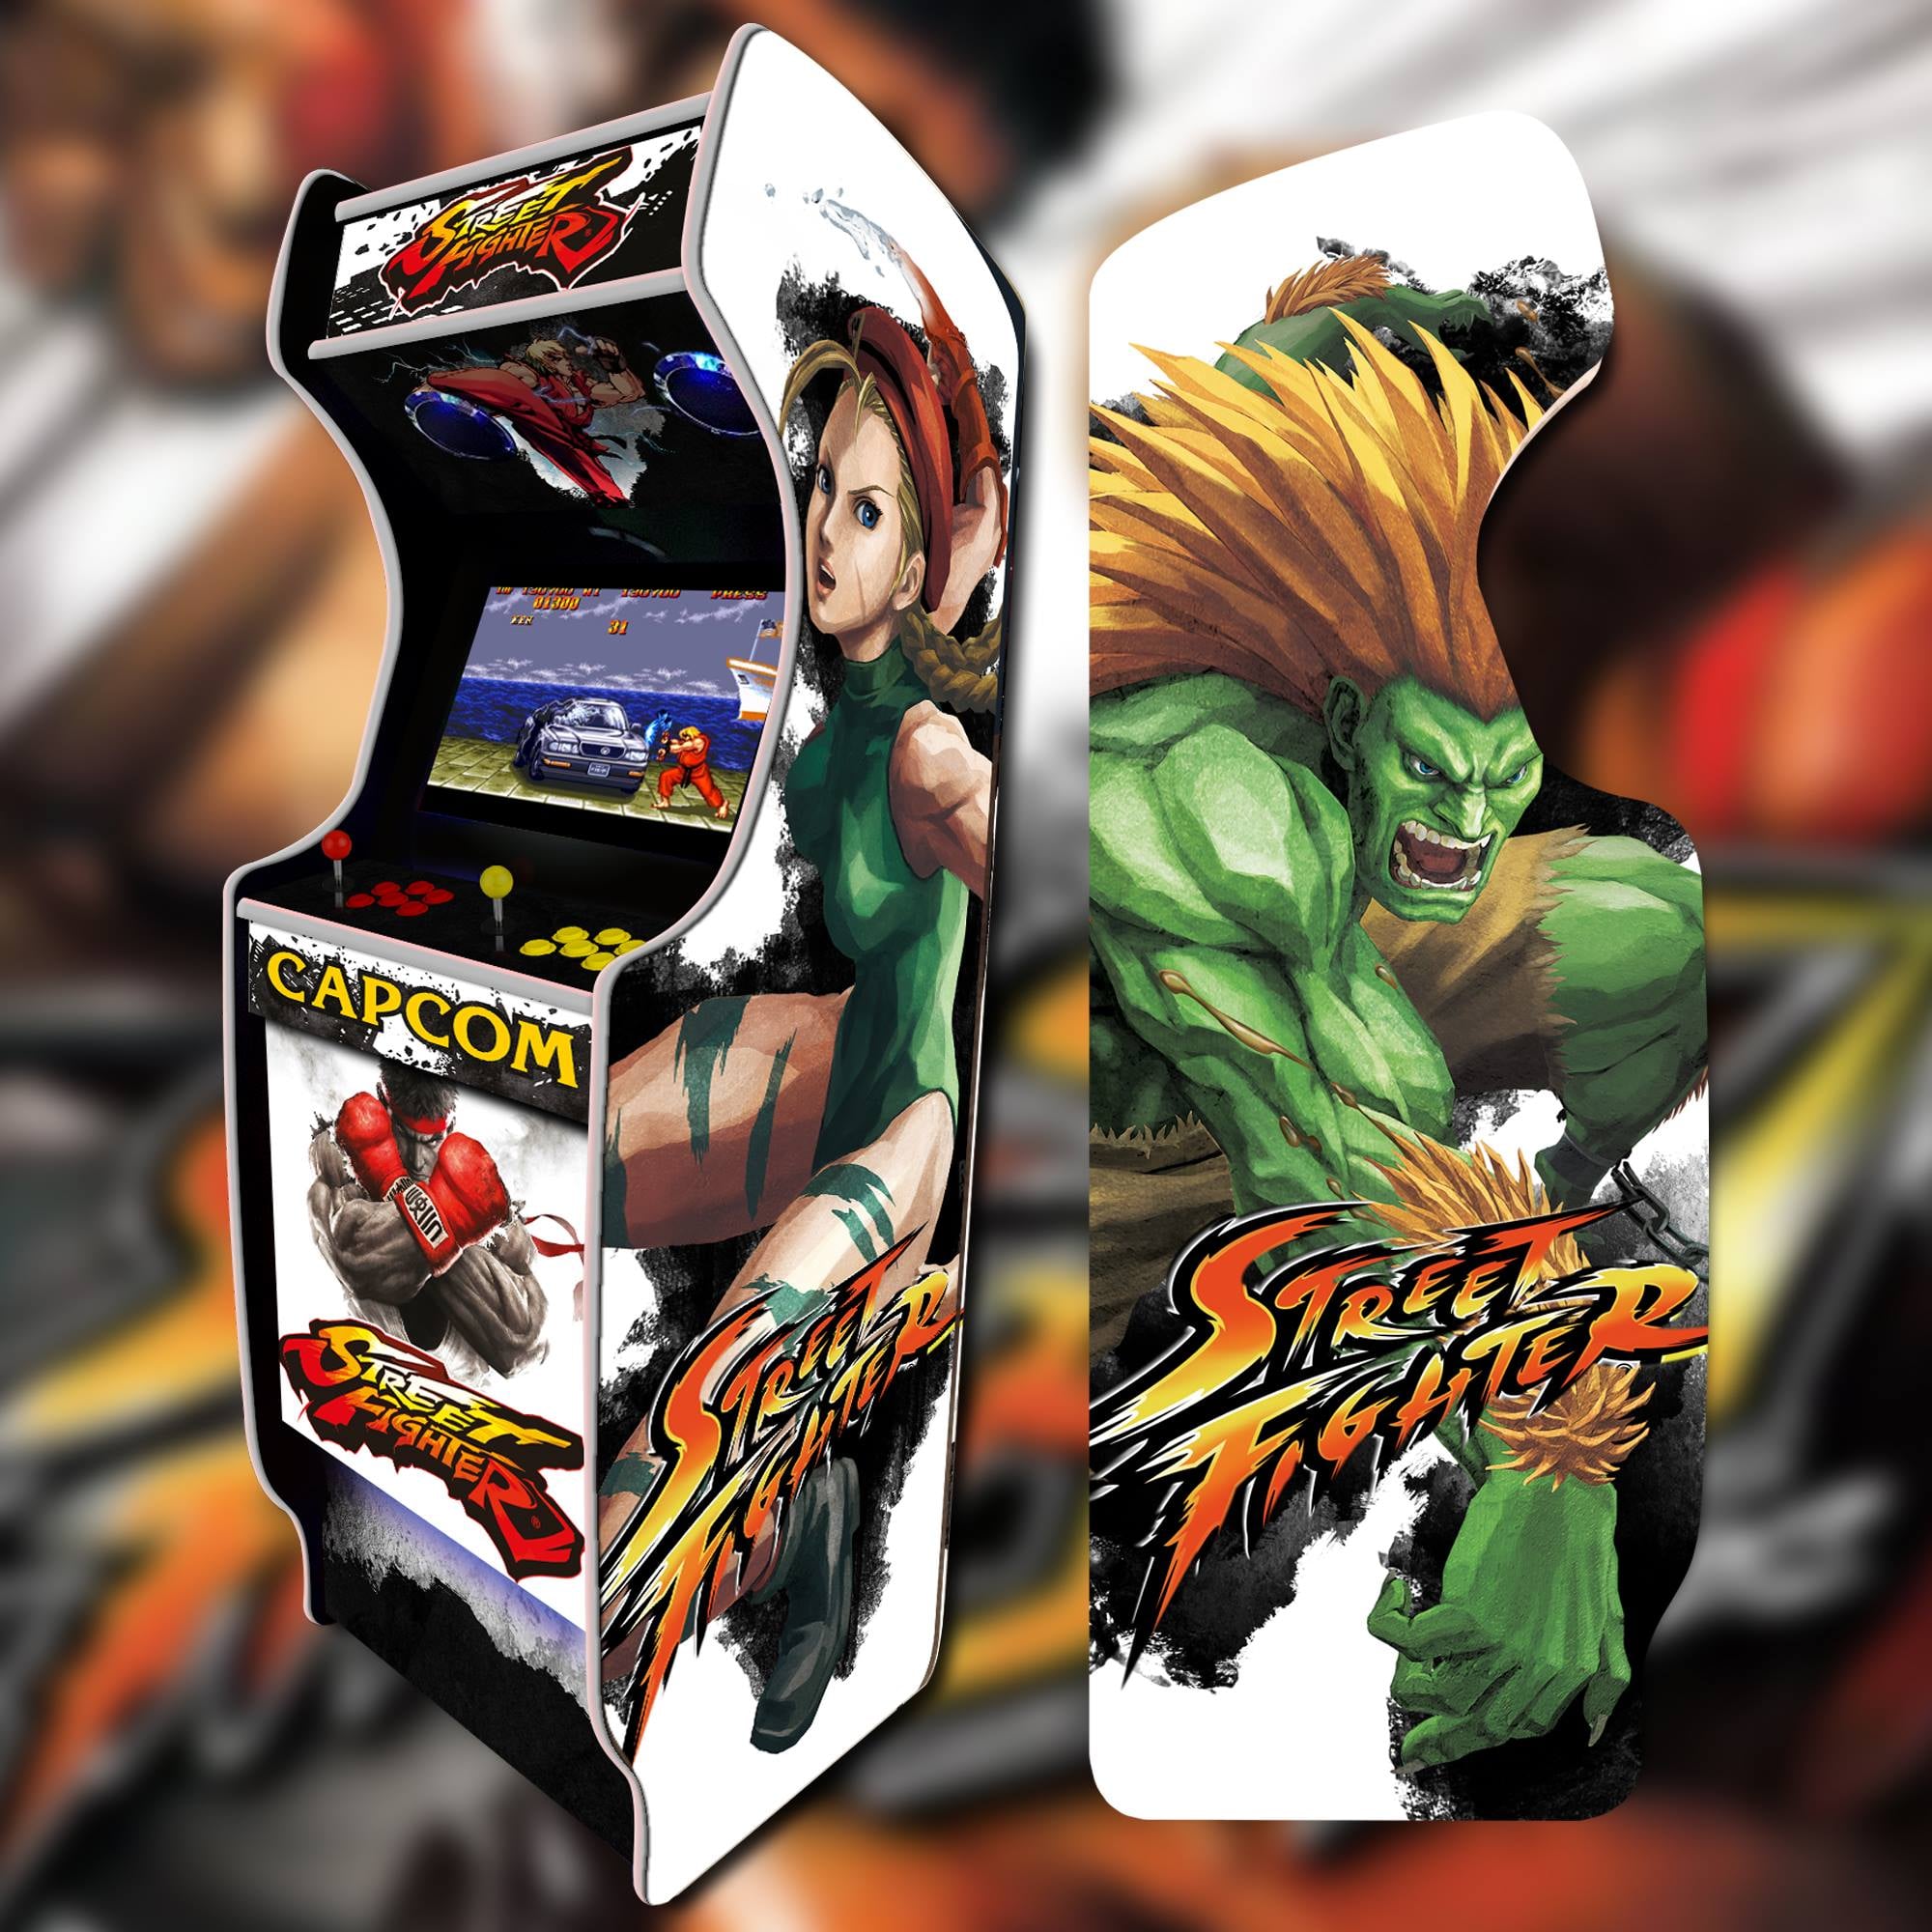 borne daracade Street Fighter esil game.fr  1 - Location Borne arcade Dragonball-Z 2800 jeux